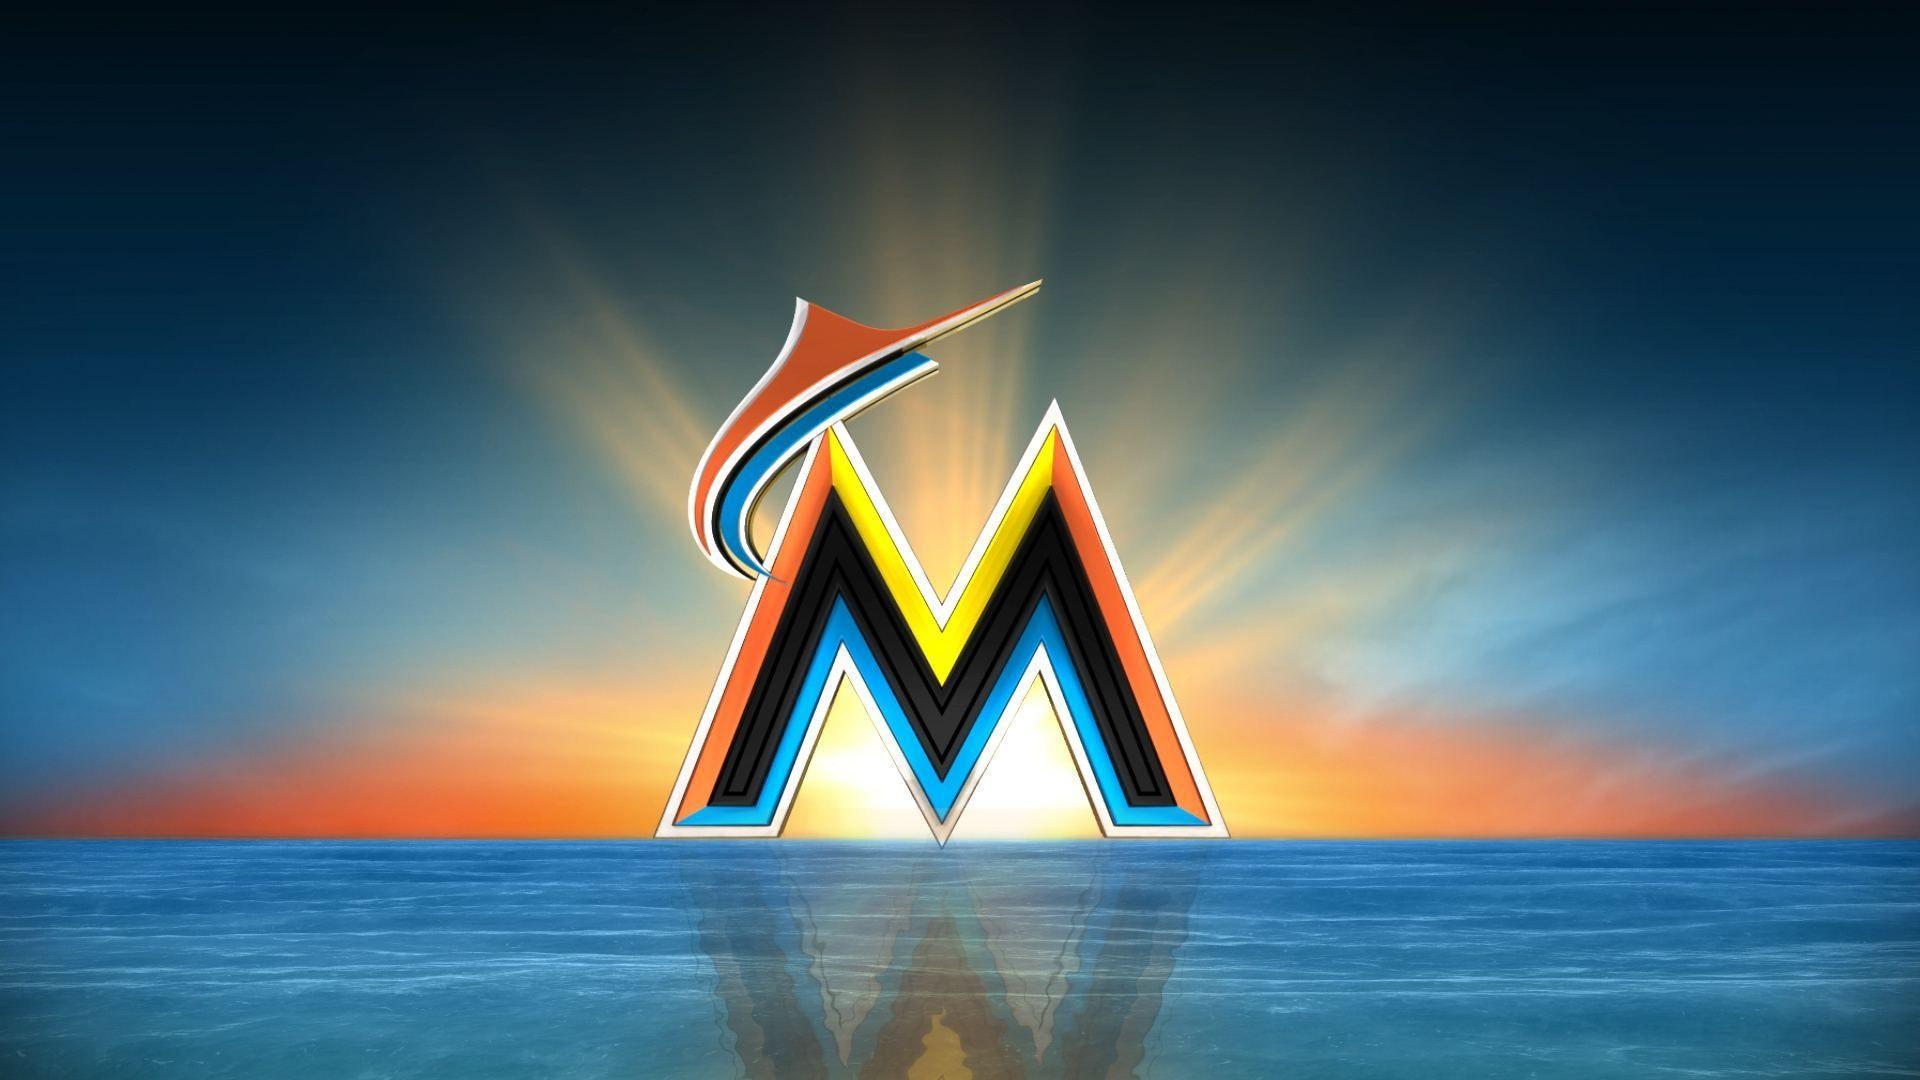 Miami Marlins vs Kansas City Royals Tickets, Marlins Ballpark, Miami,Florida,United States